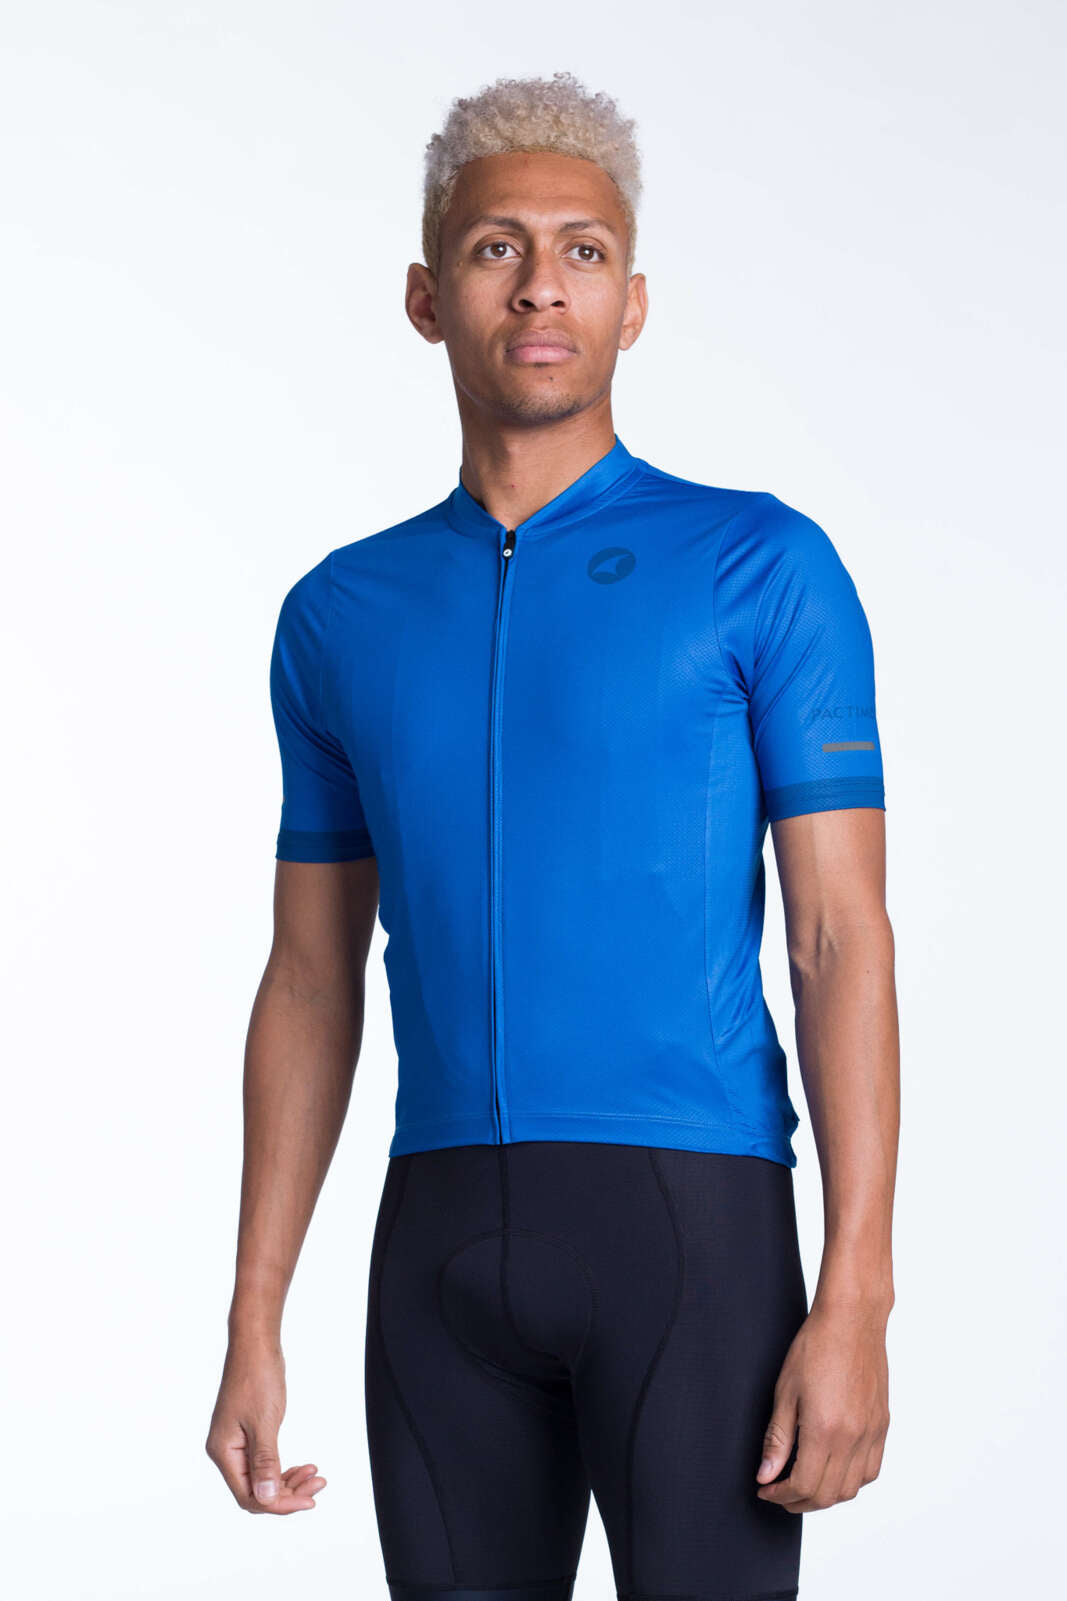 Men's Blue Bike Jersey - Ascent Front View